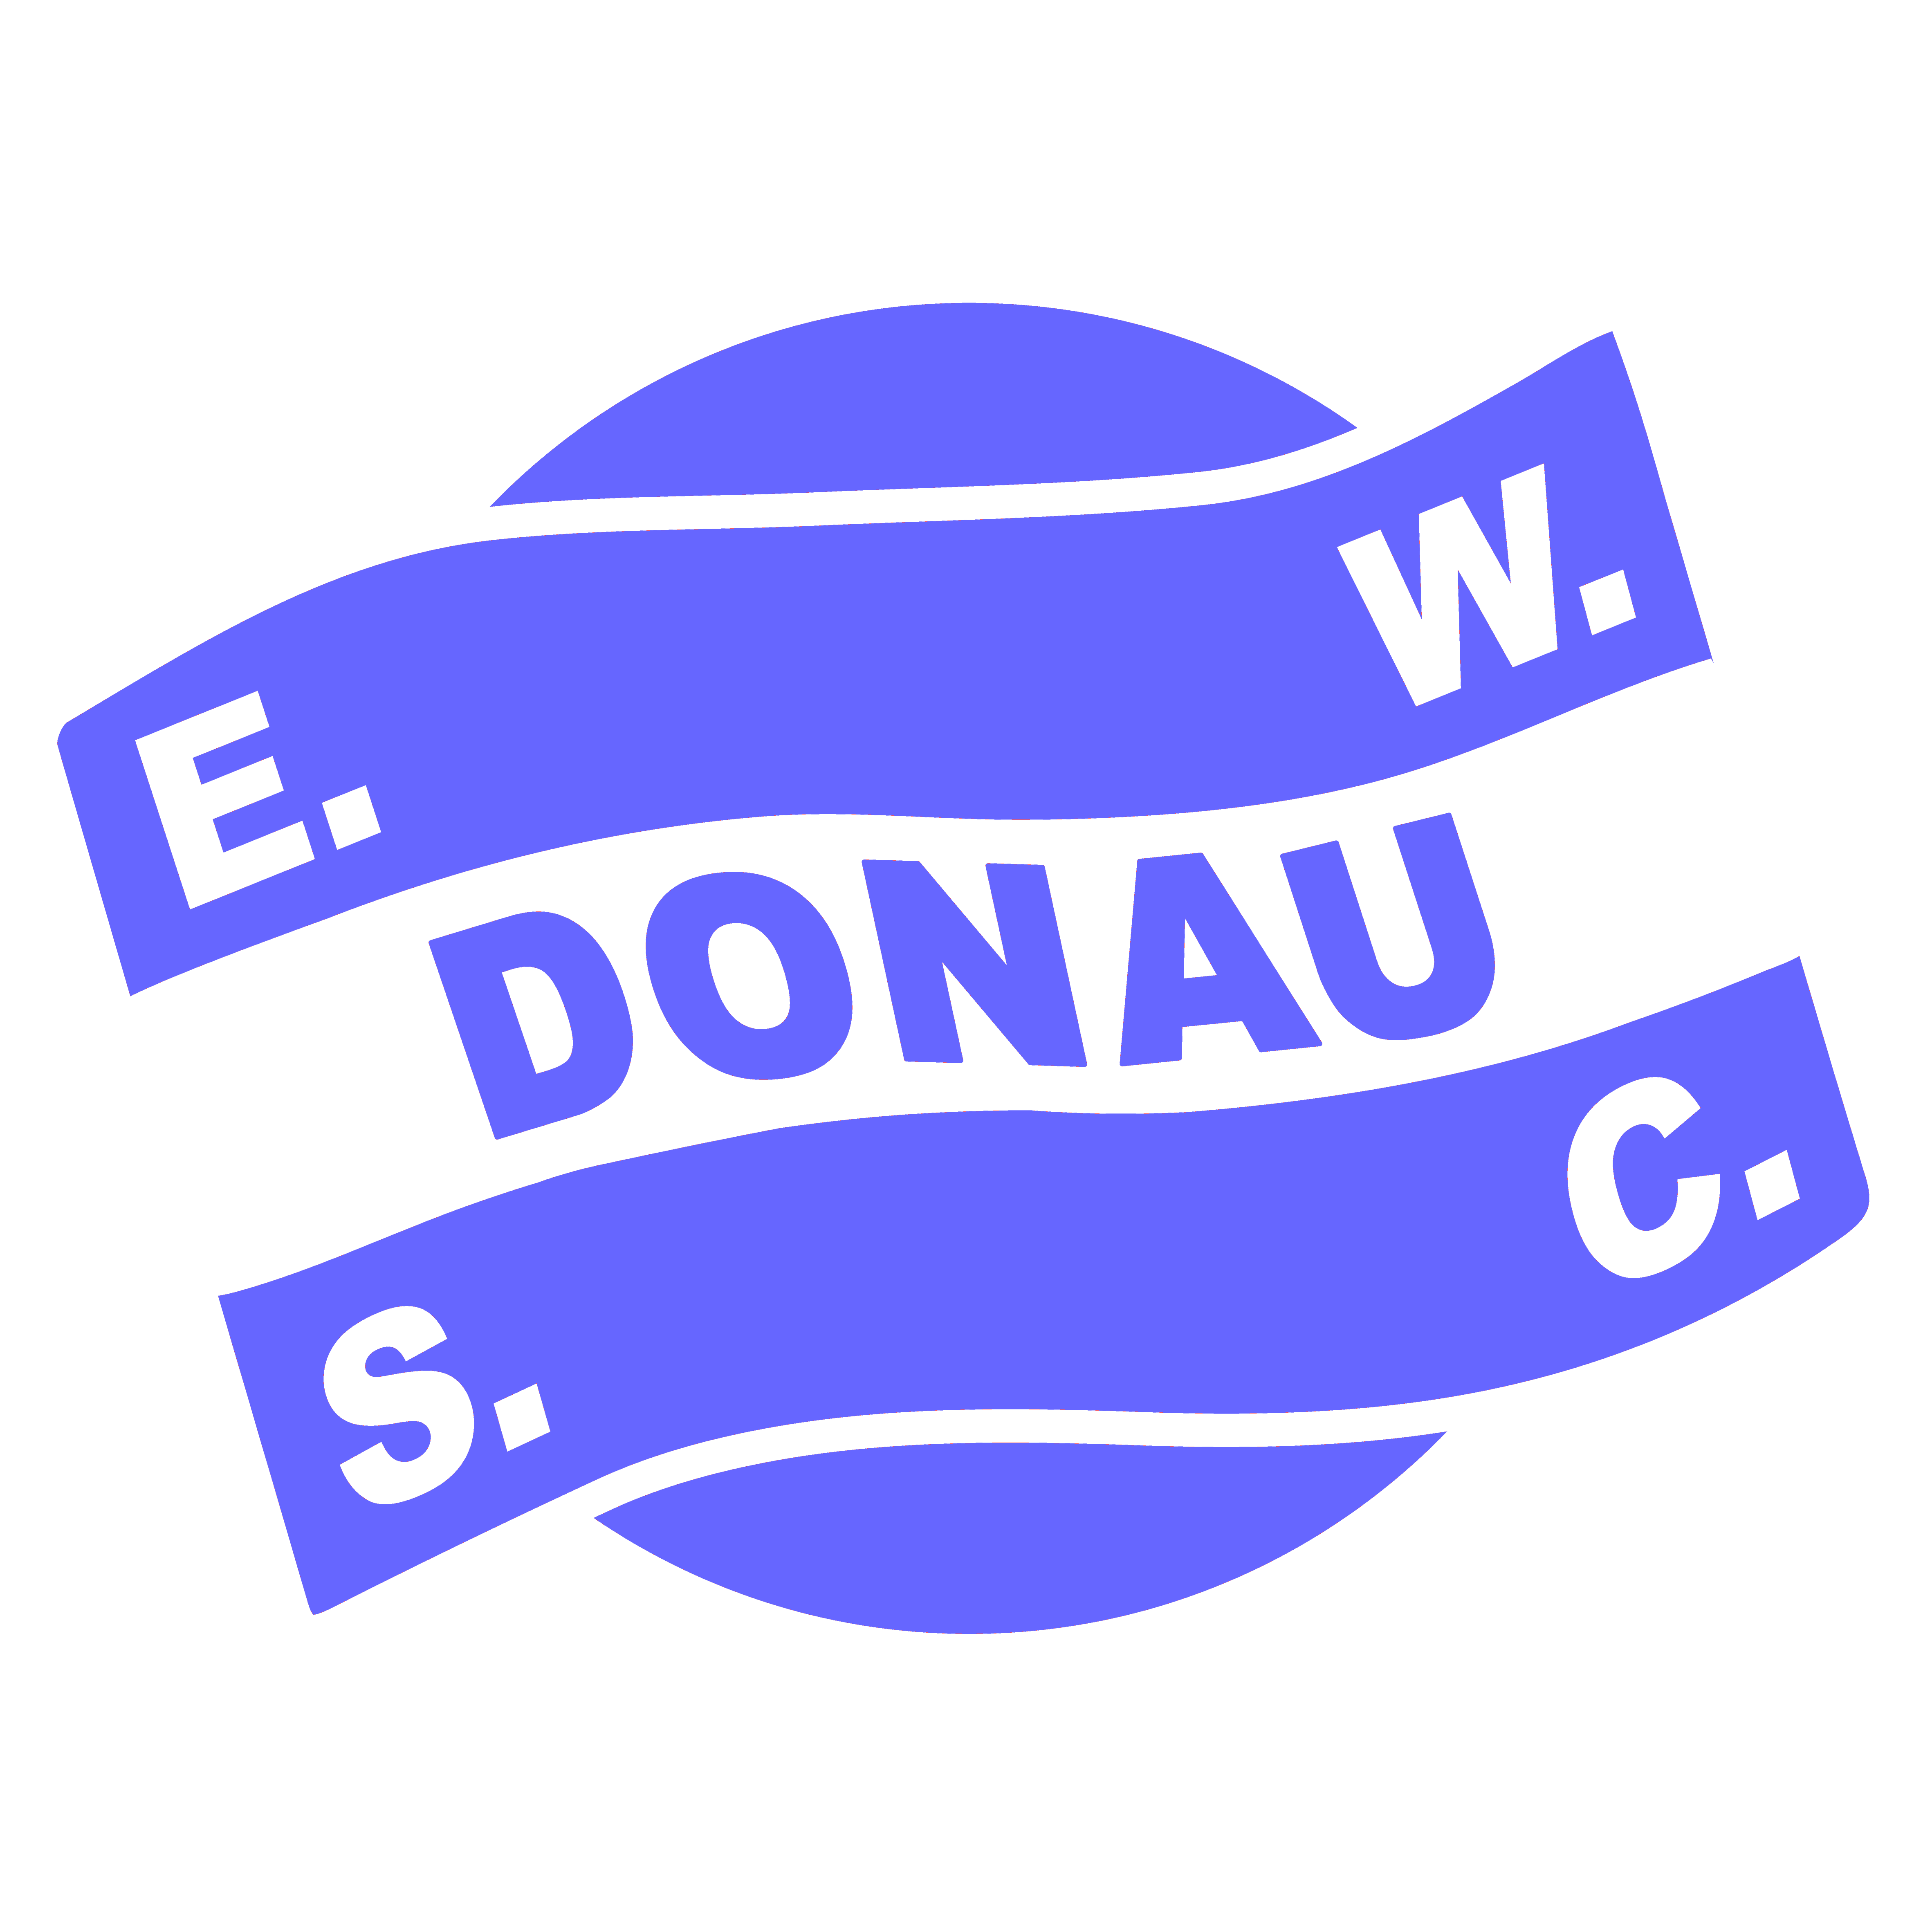 E.W. Donau SC 1903